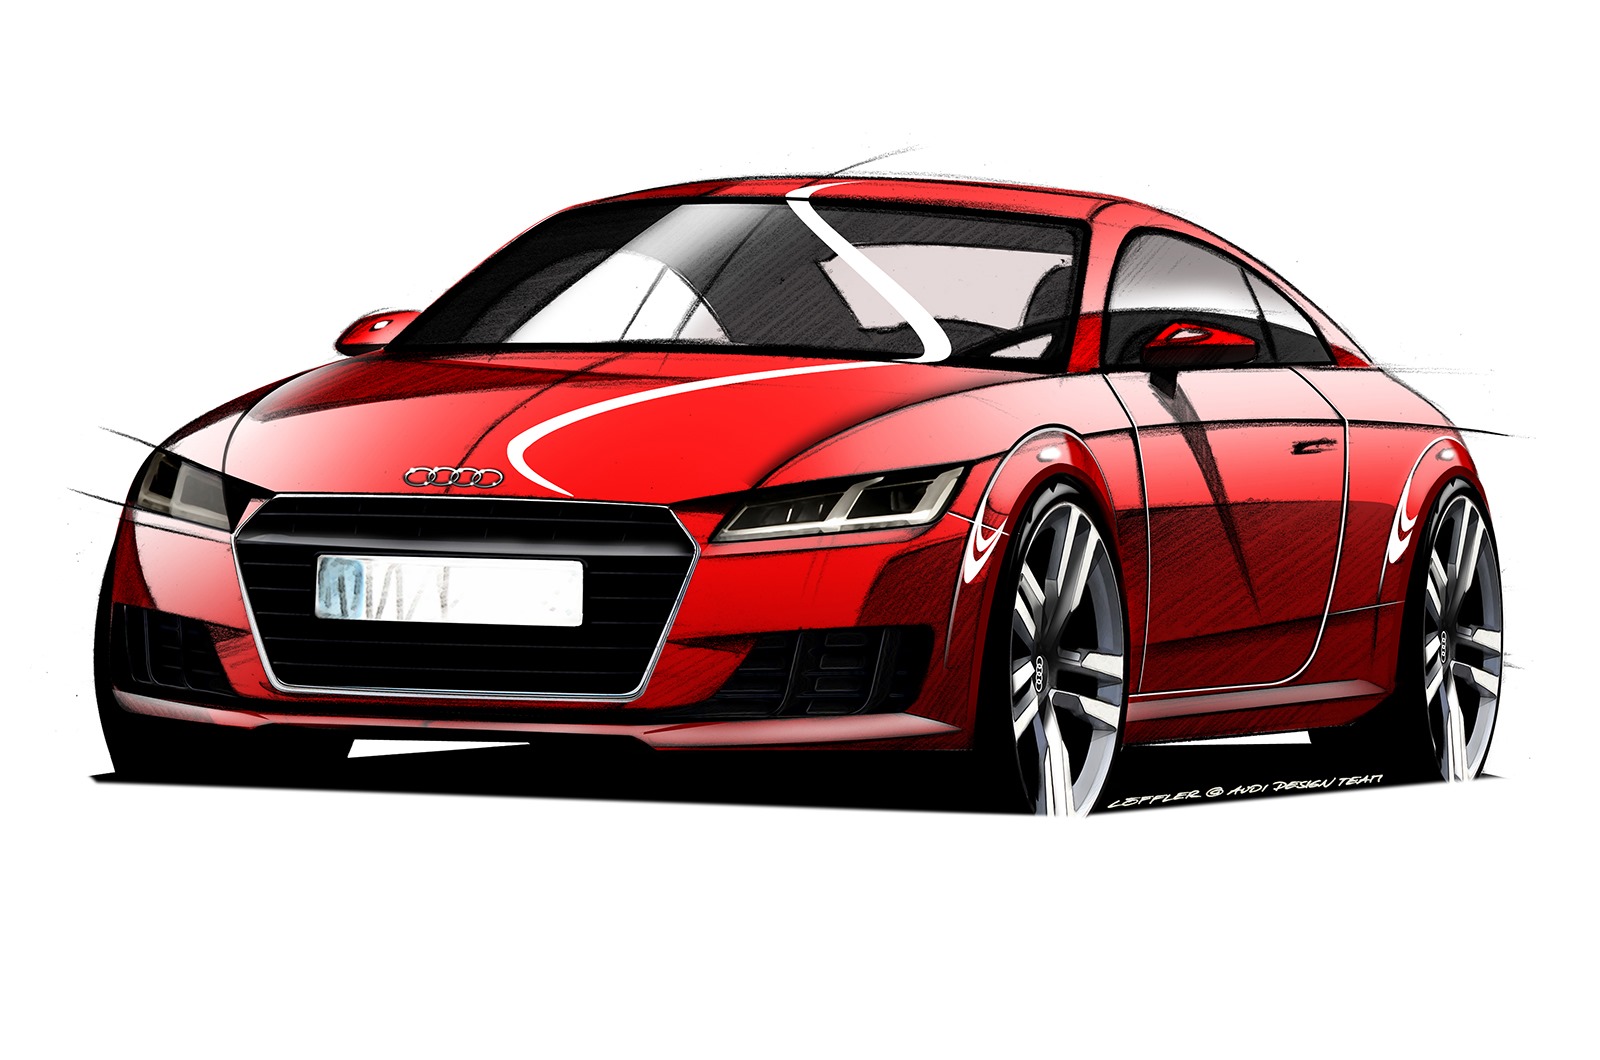 2015 Audi TT sketches reveal all-new model